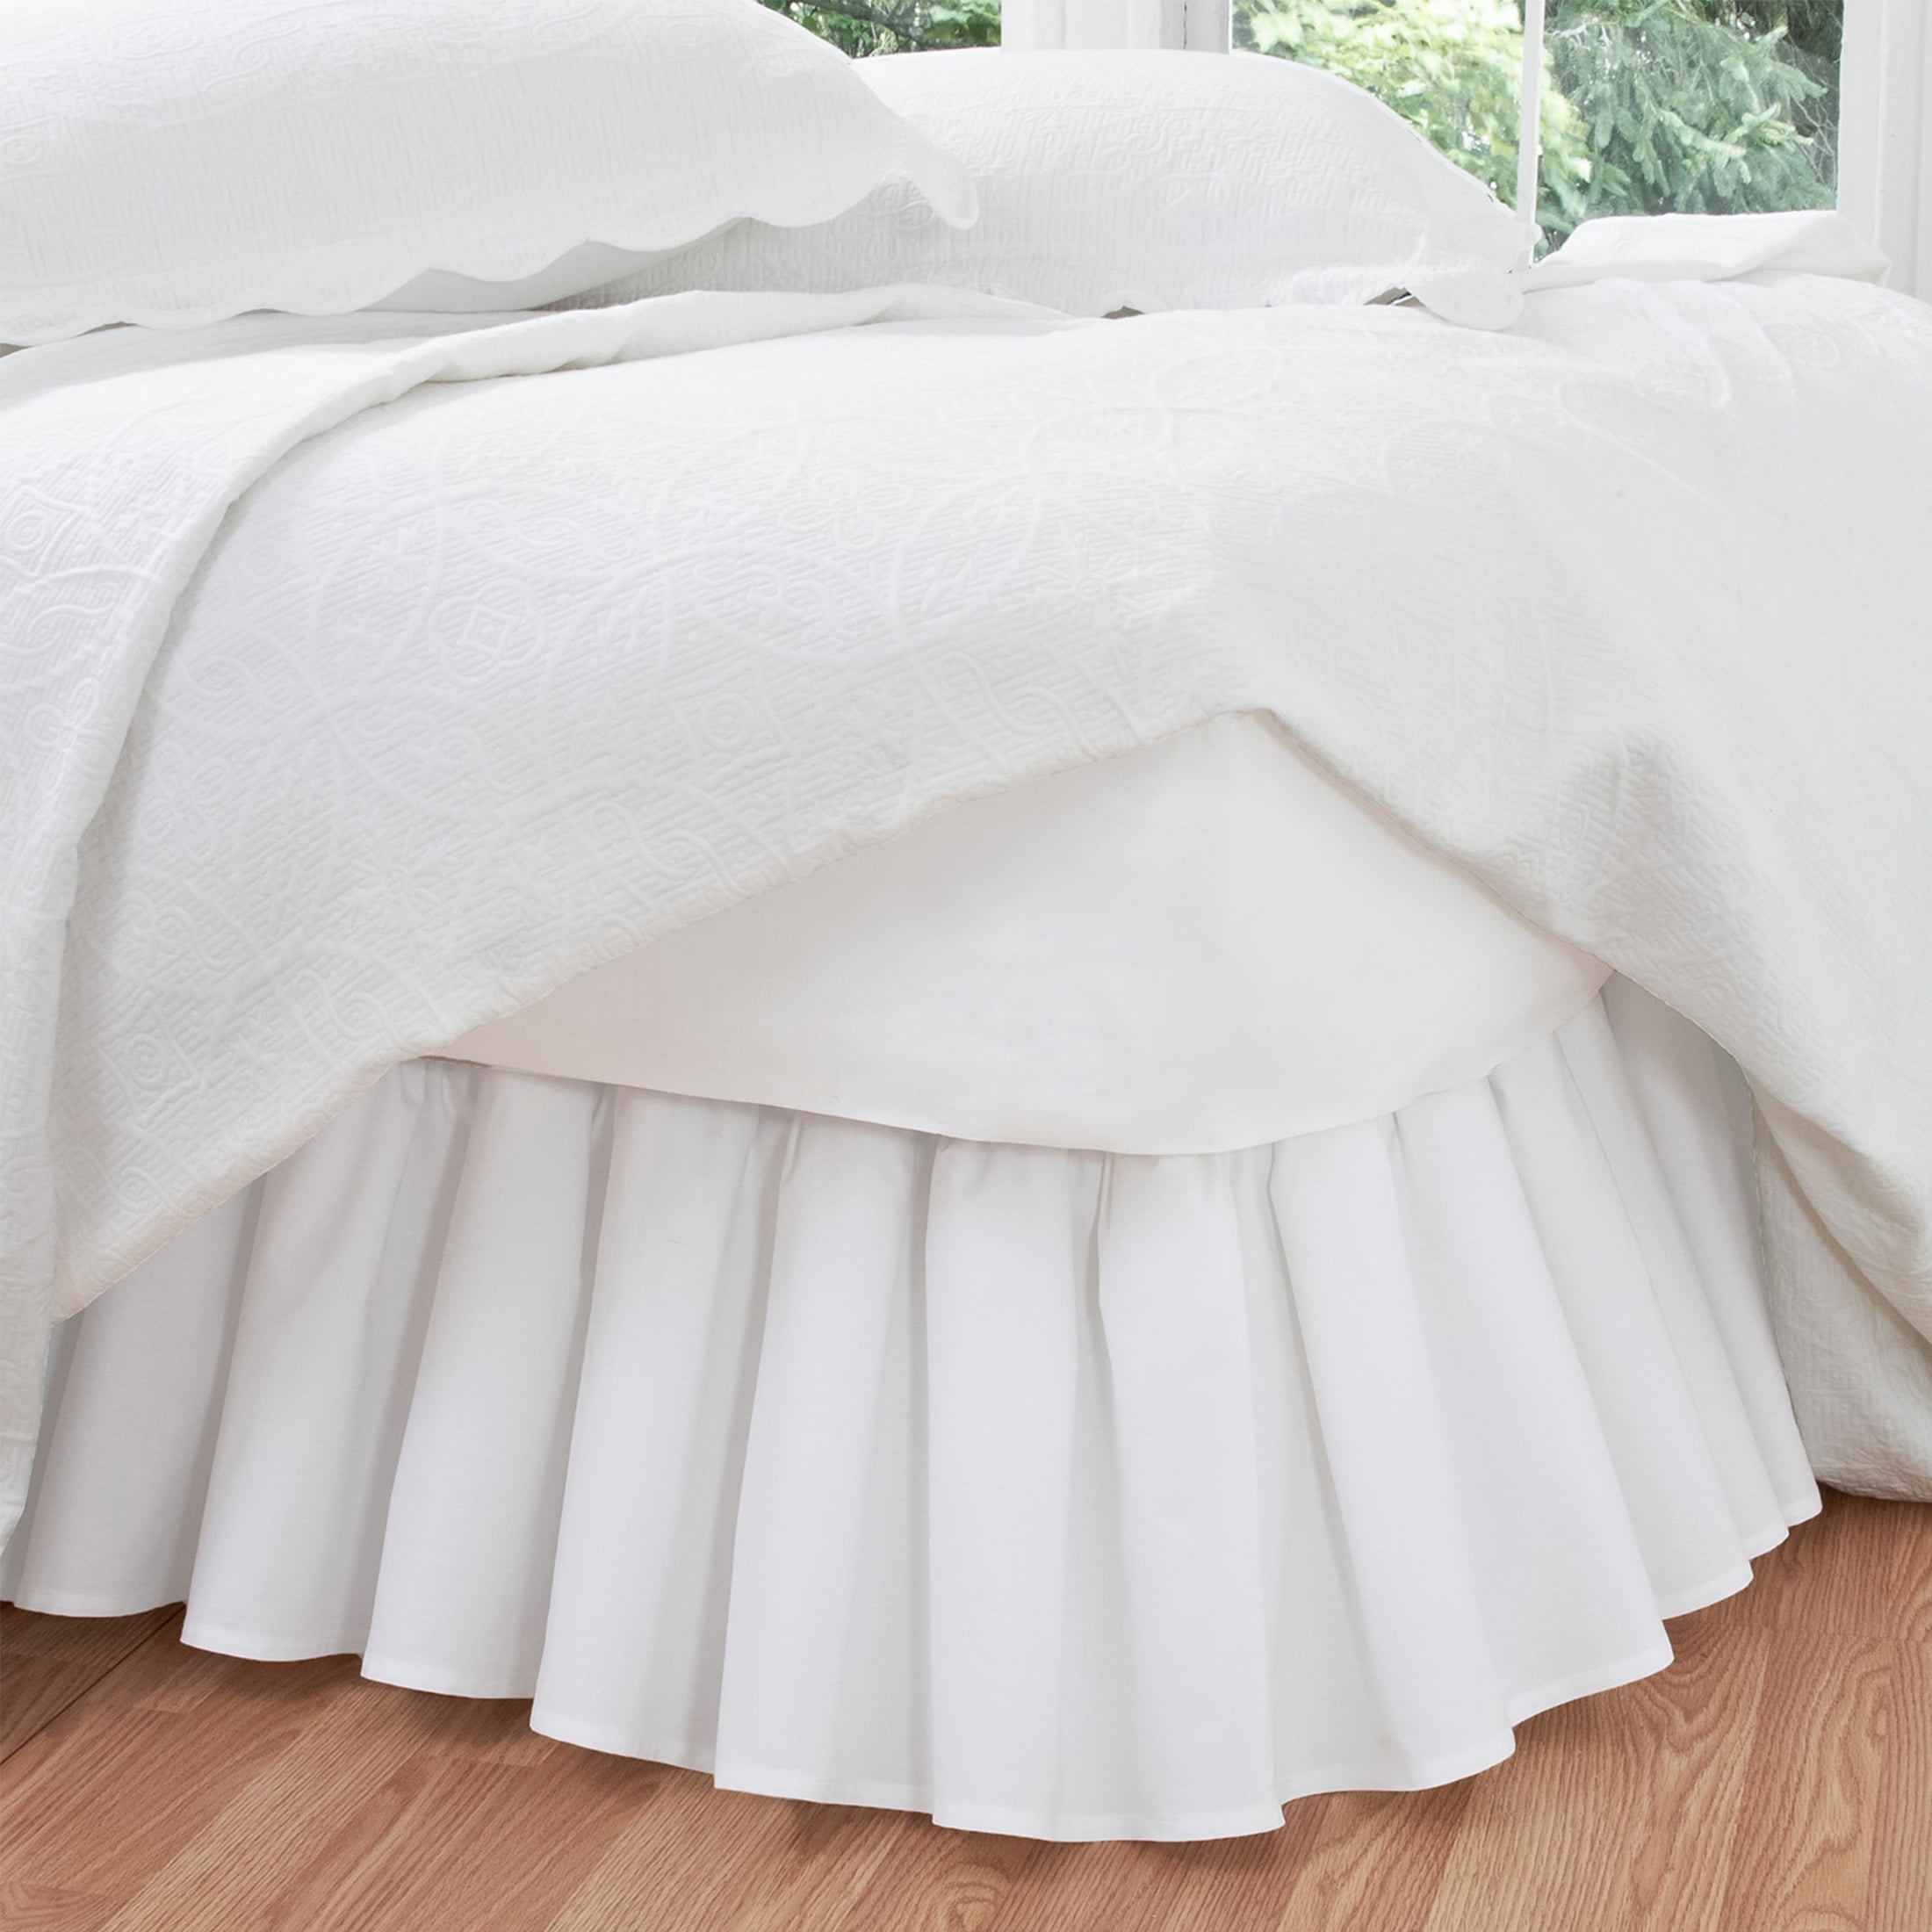 PRINCESS BED SKIRT DUST RUFFLE SHEAR TUTU WHITE VOILE Twin Single BEDSKIRT 